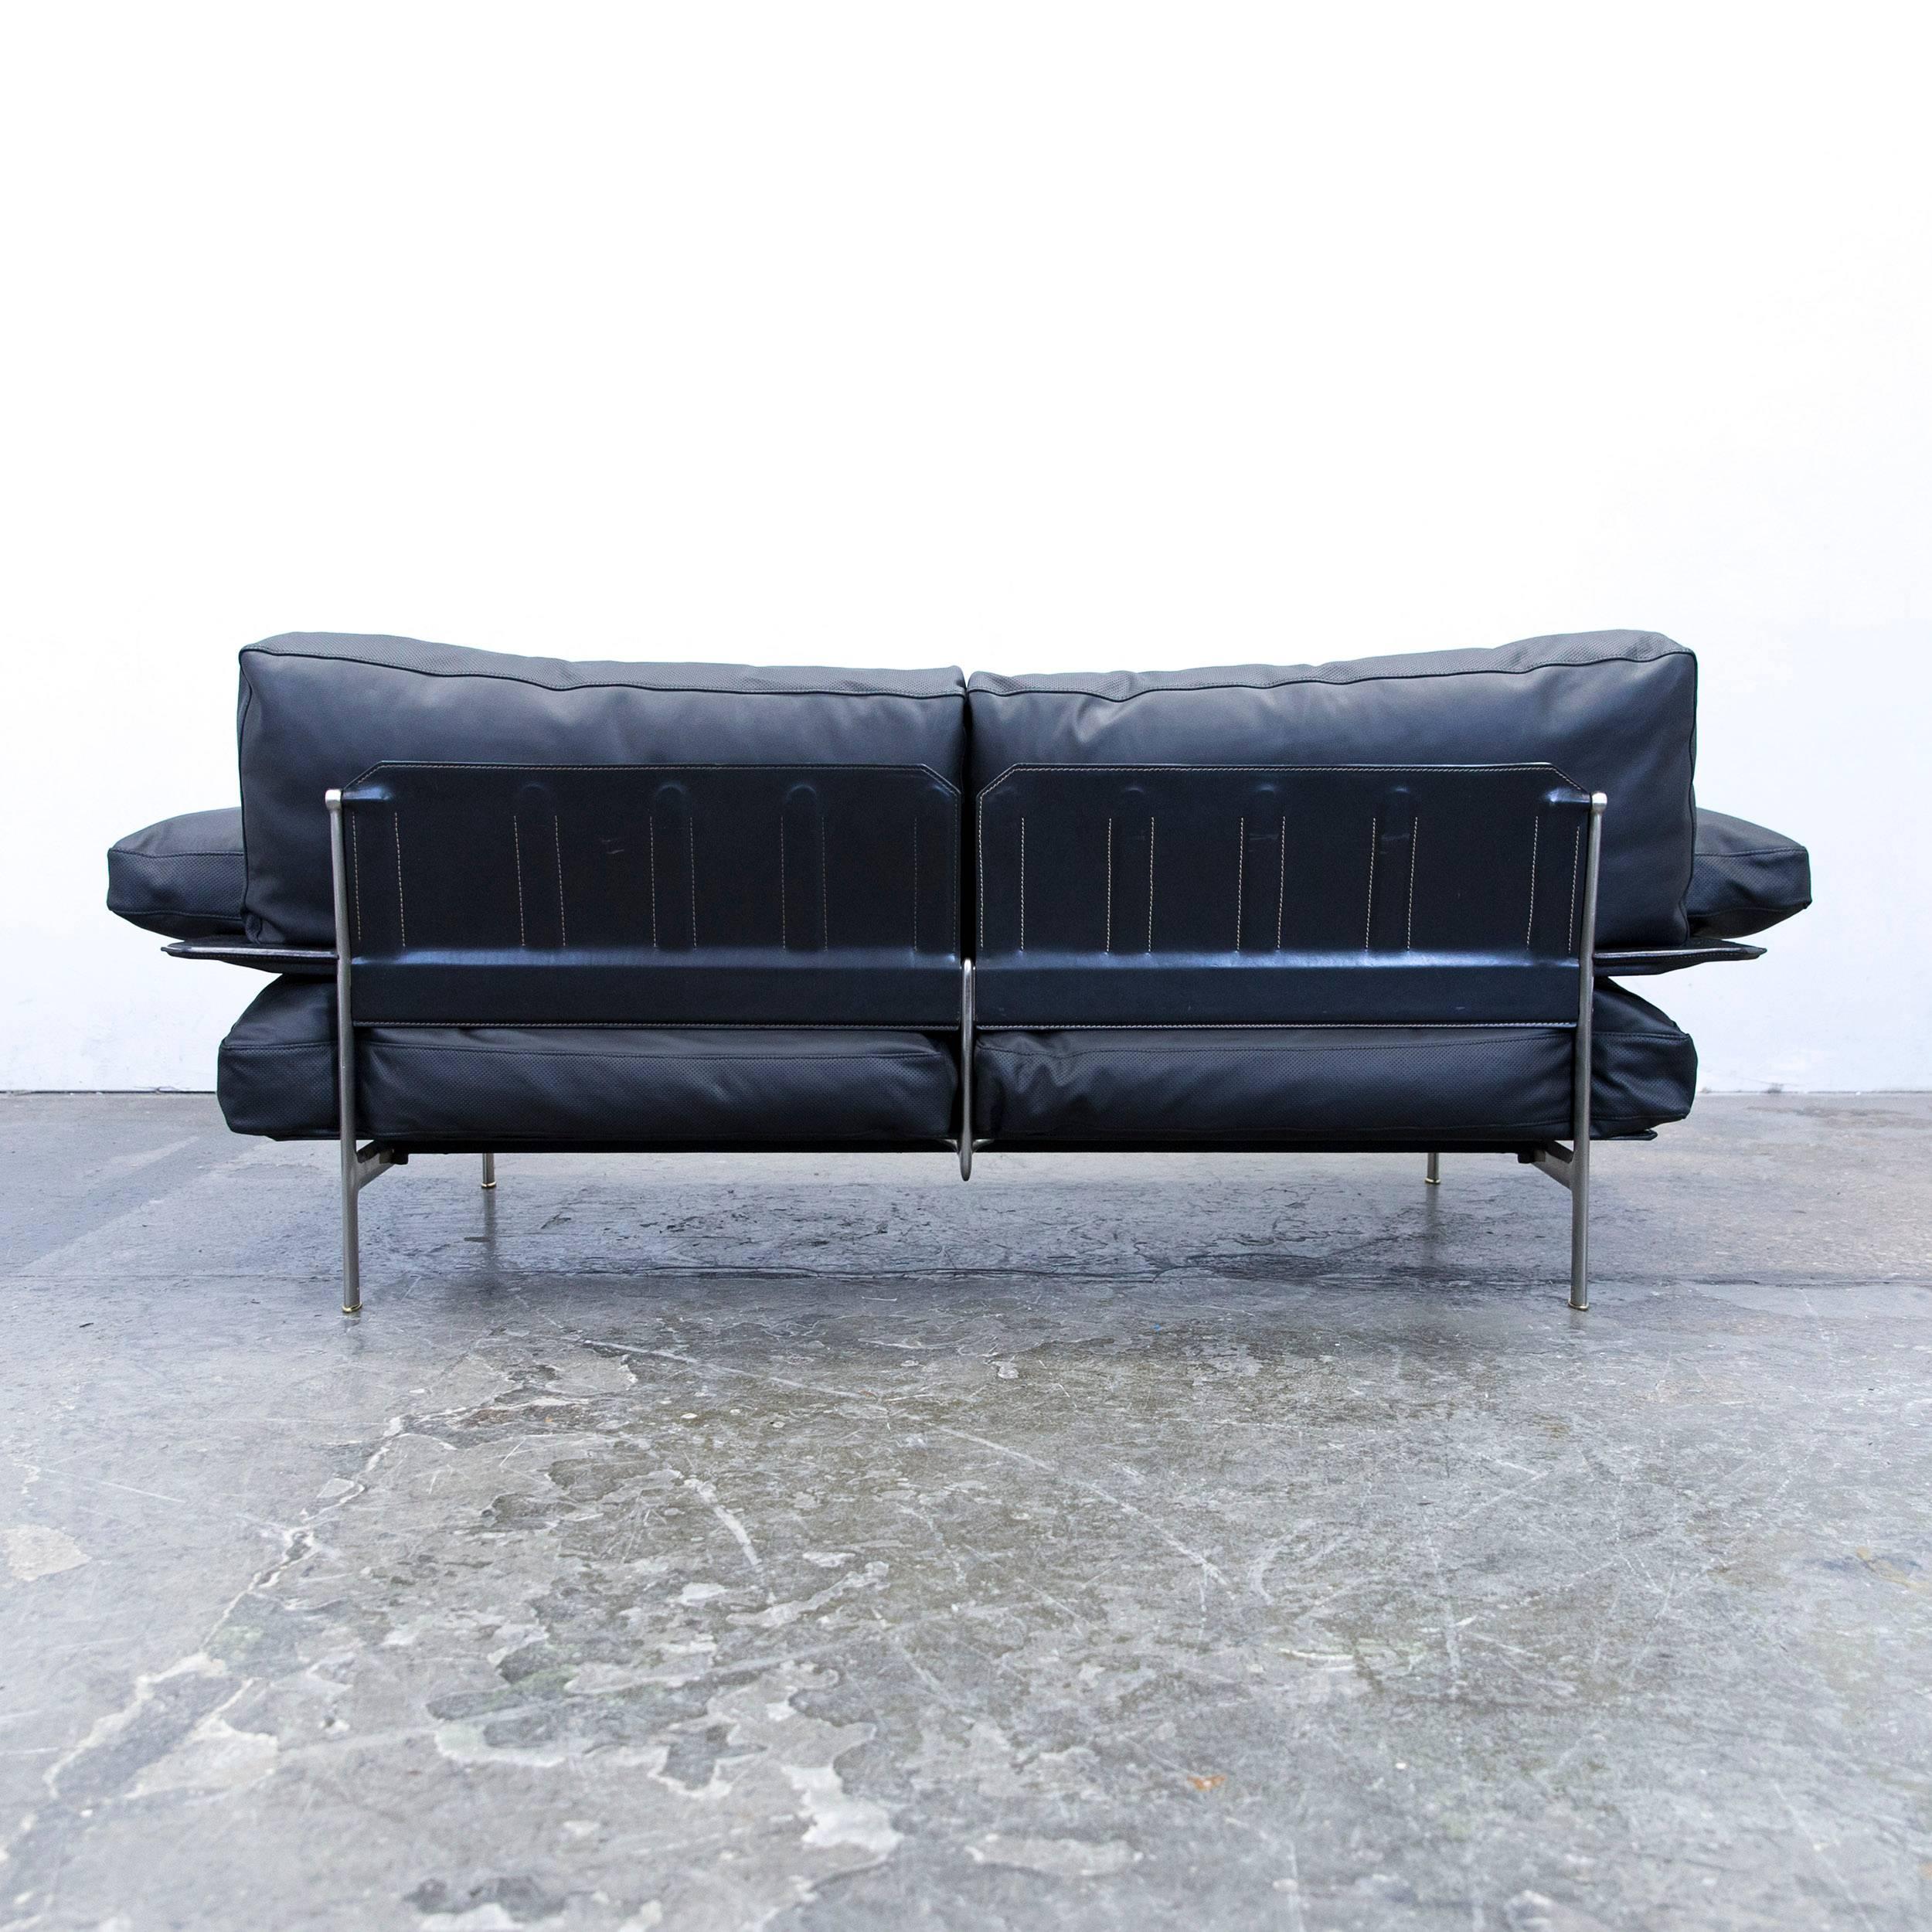 B&B Italia Diesis Designer Sofa Leather Black Two-Seat Couch Modern 2